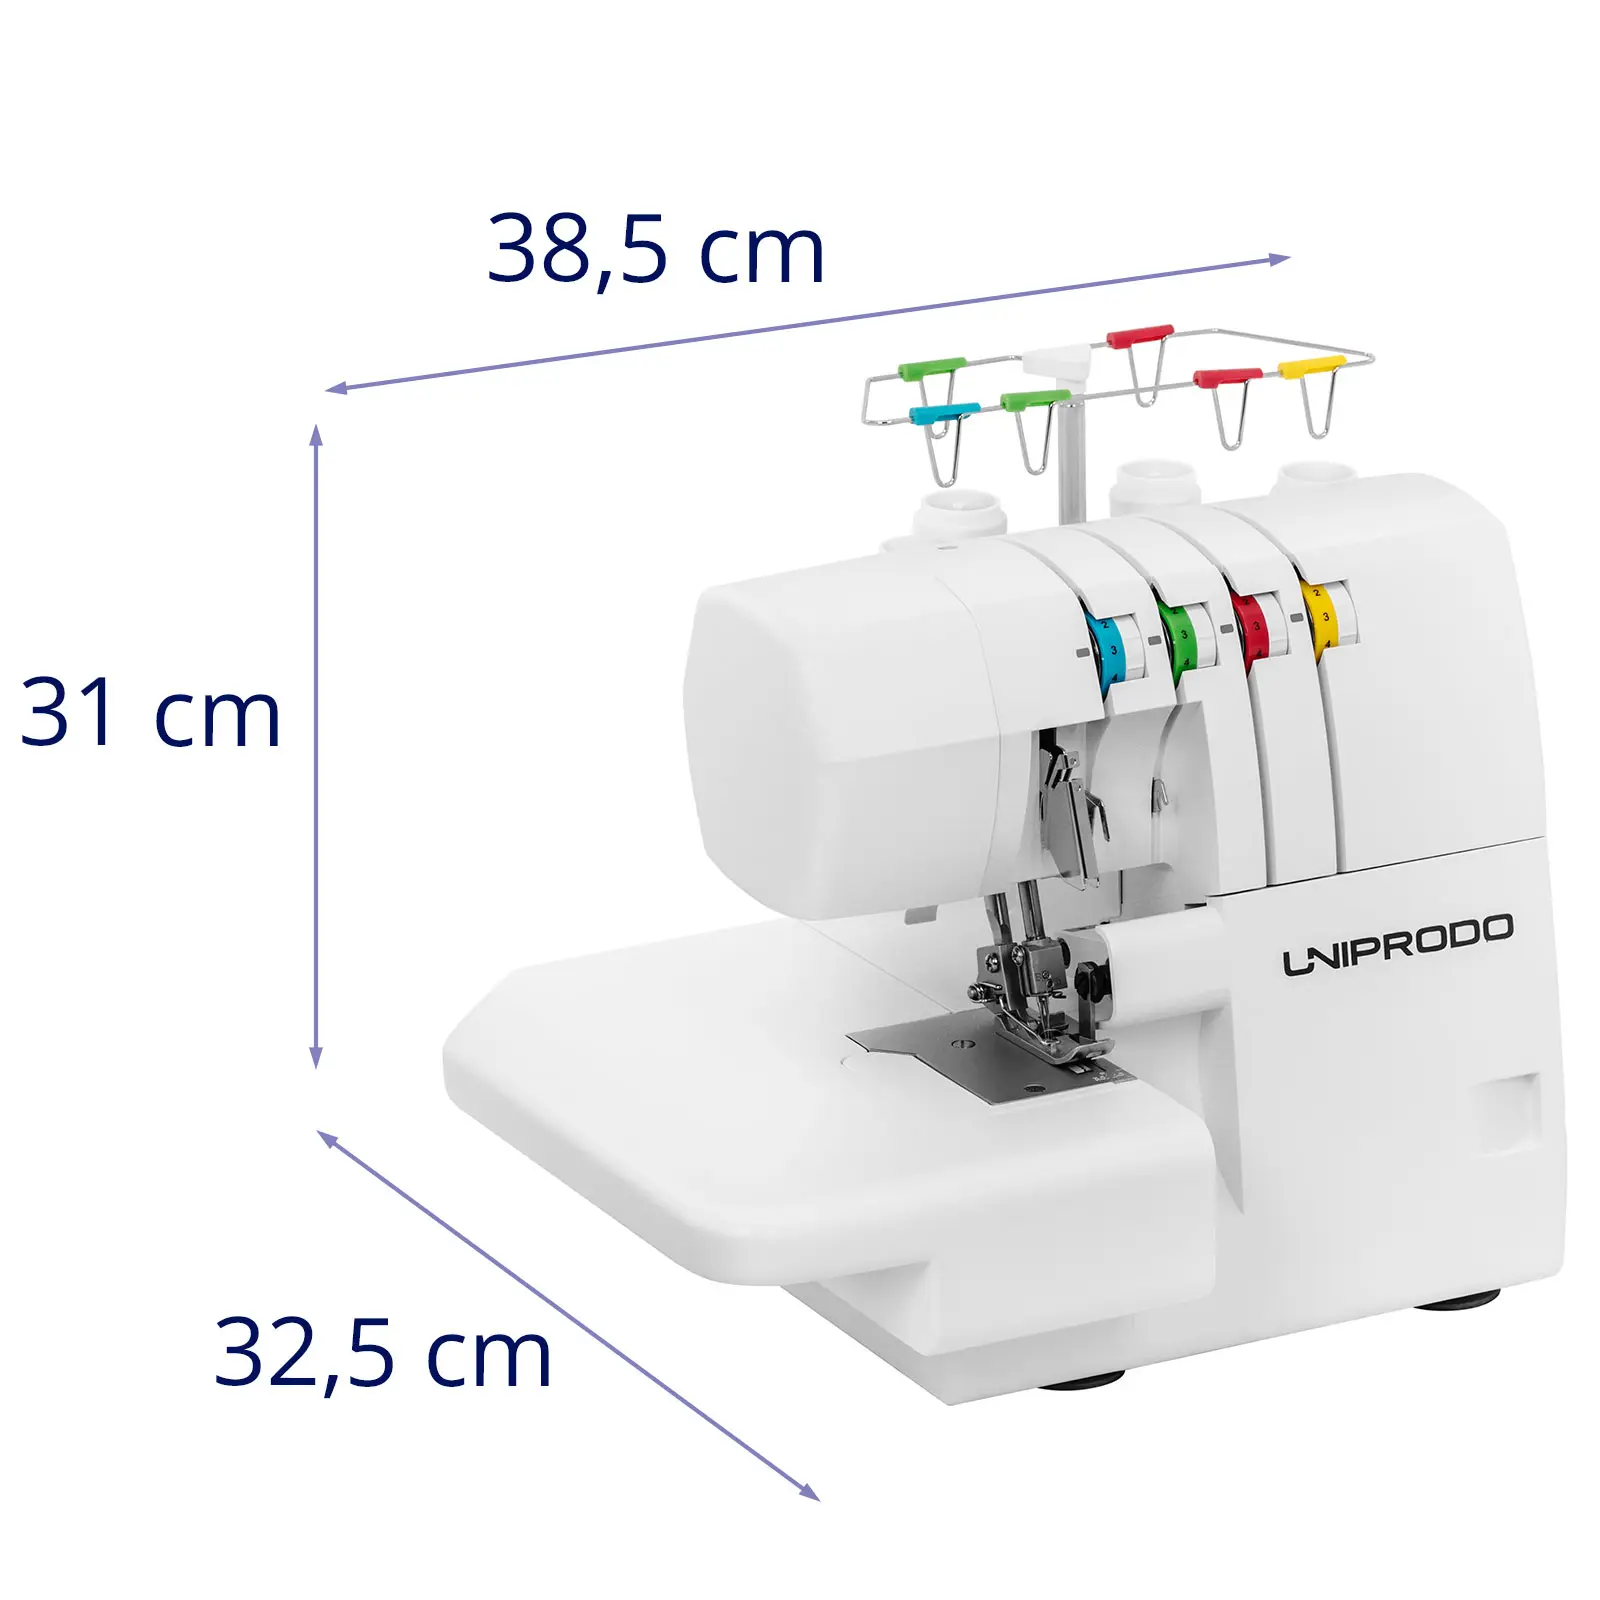 Overlocker Sewing Machine - 1100 stitches per minute - LED